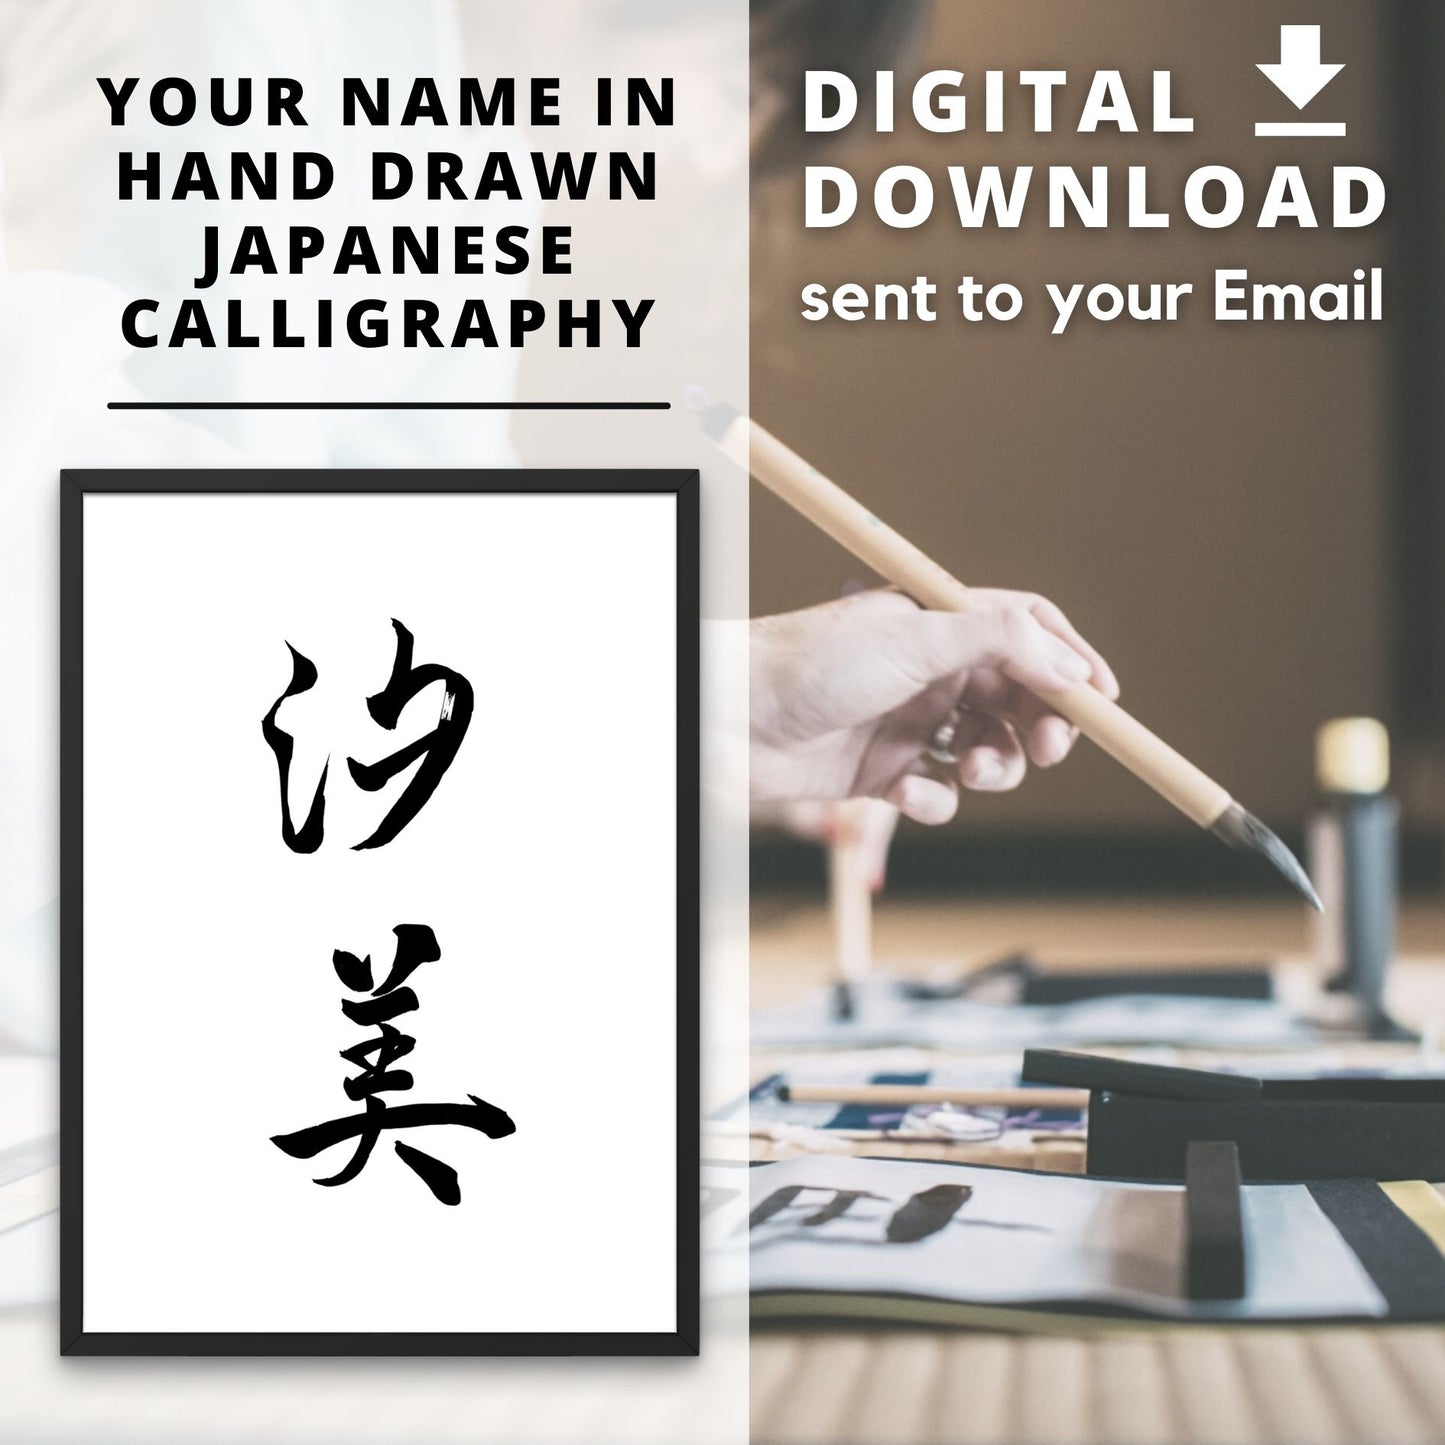 Your Name In Hand Drawn Japanese Calligraphy Digital Download - Kanji & Katakana